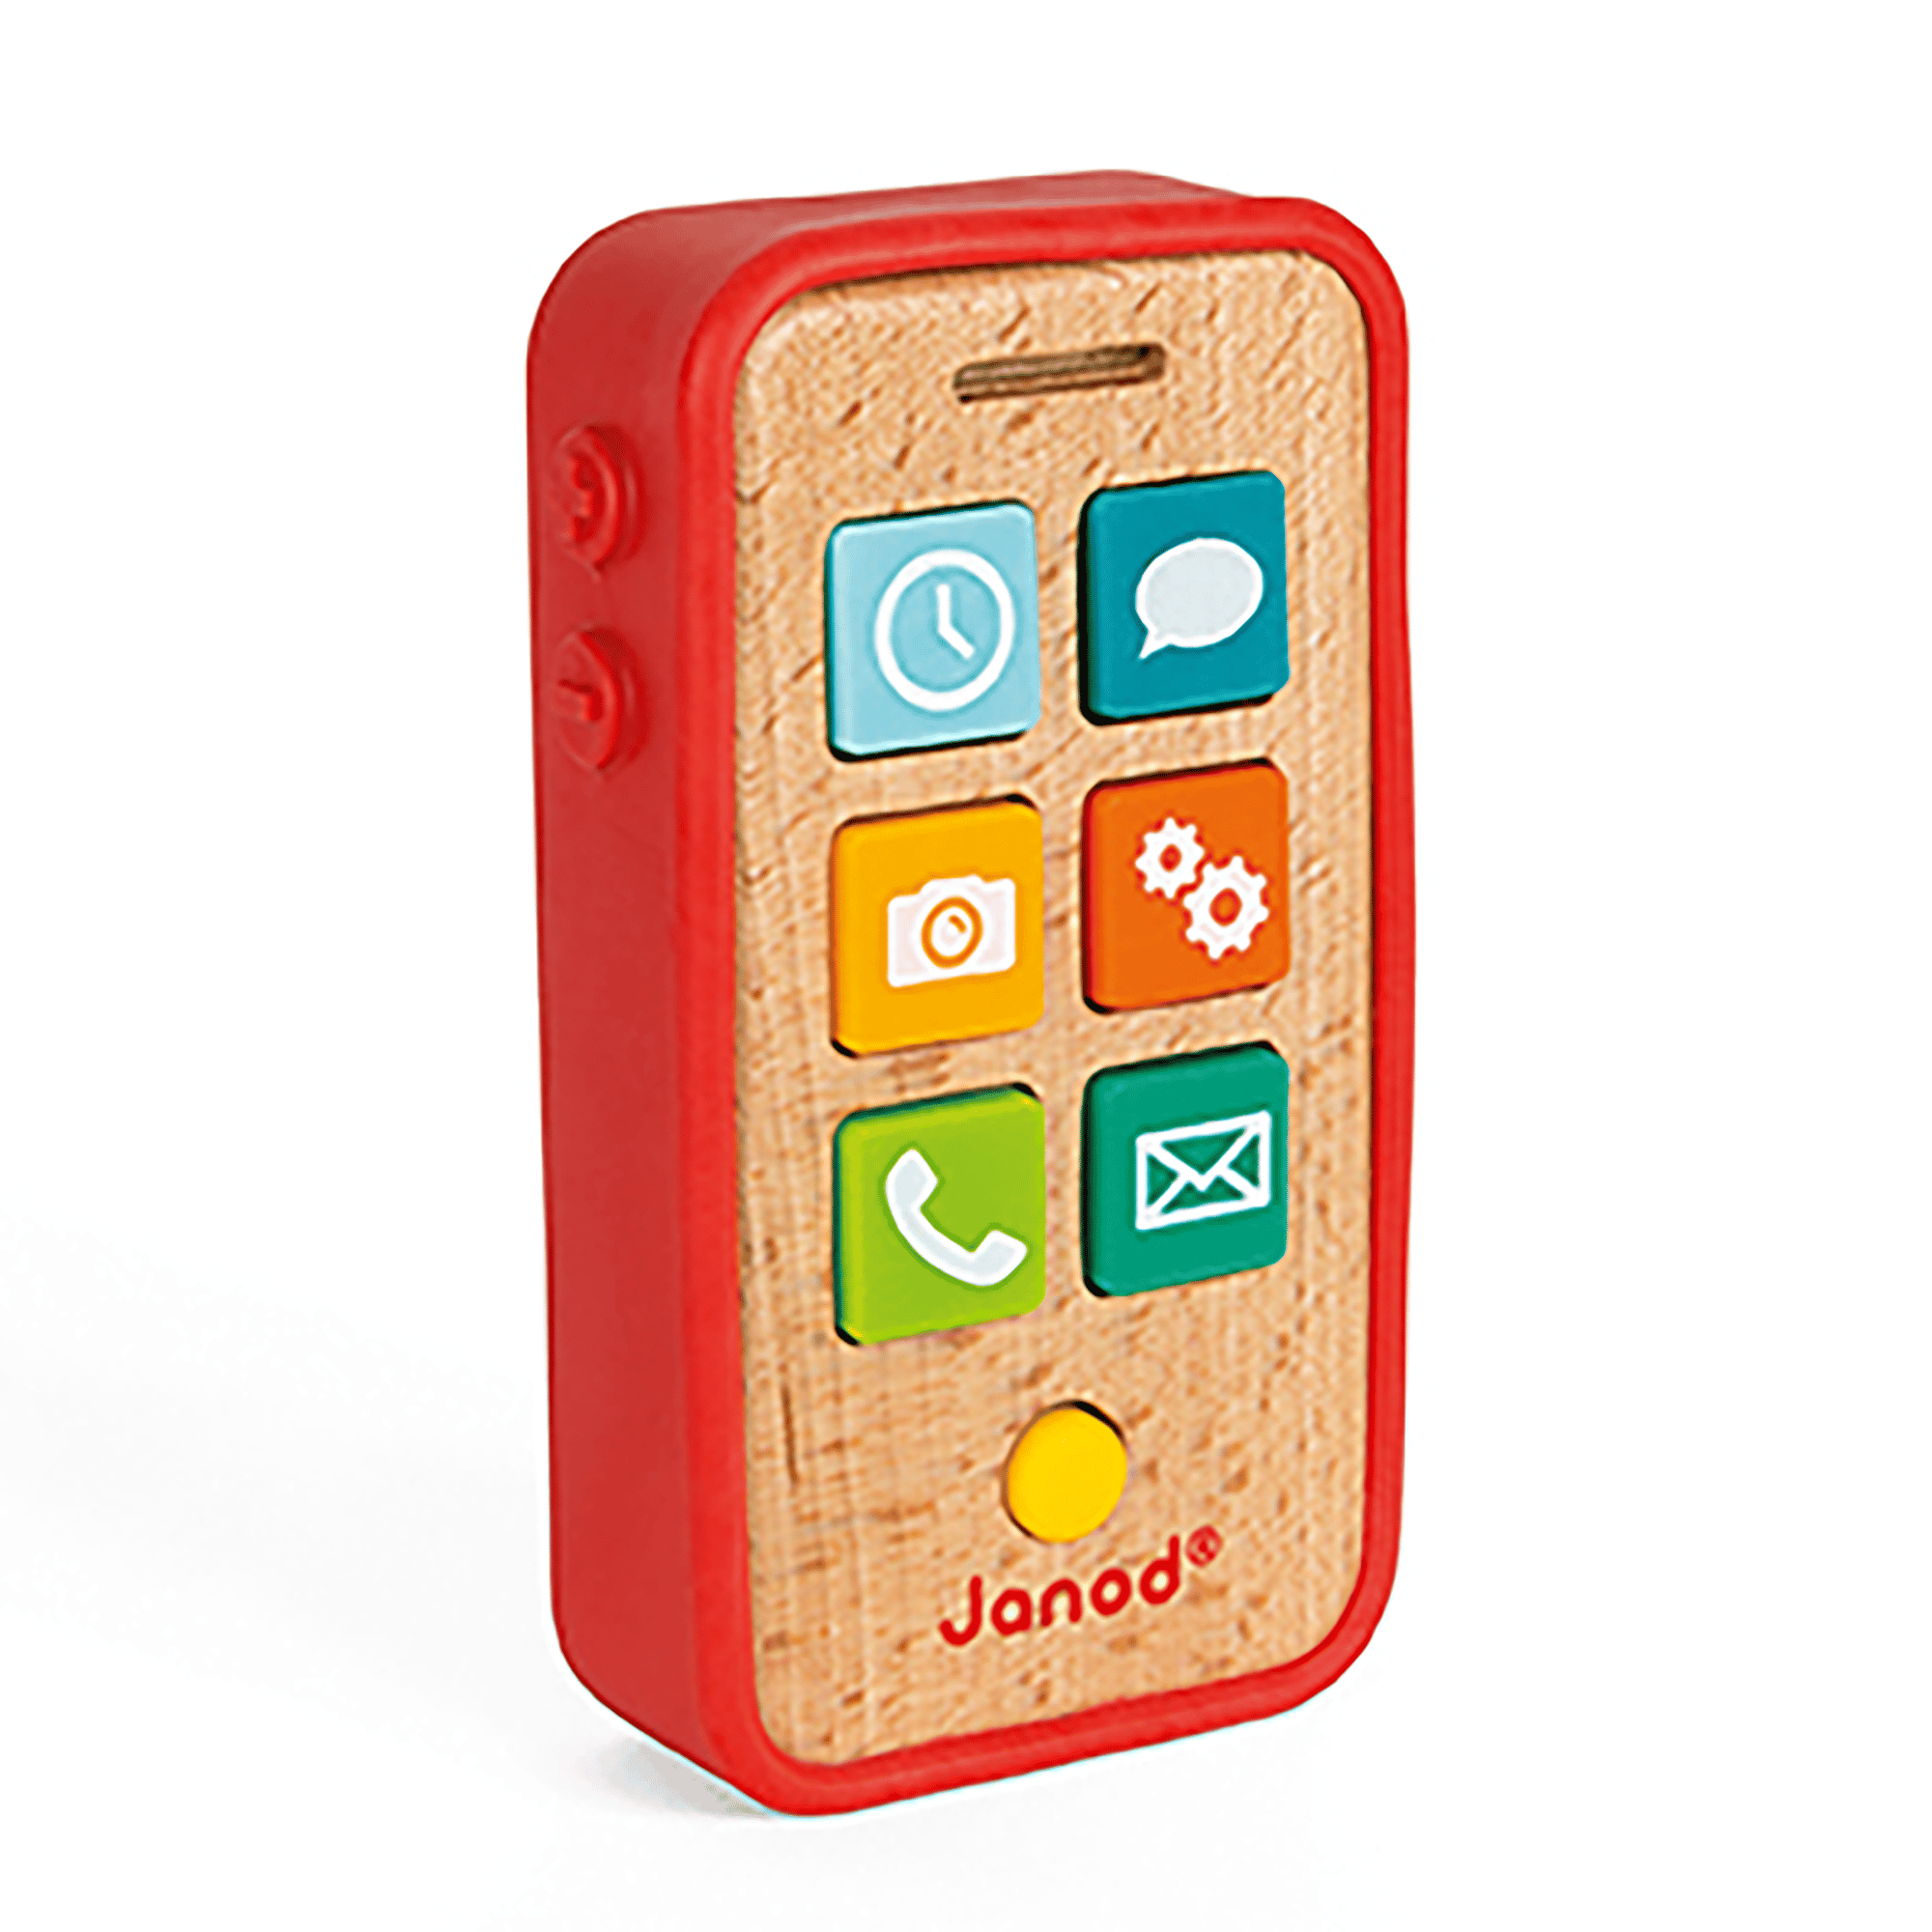 Smartphone aus Holz Janod Rot 2000584977000 1